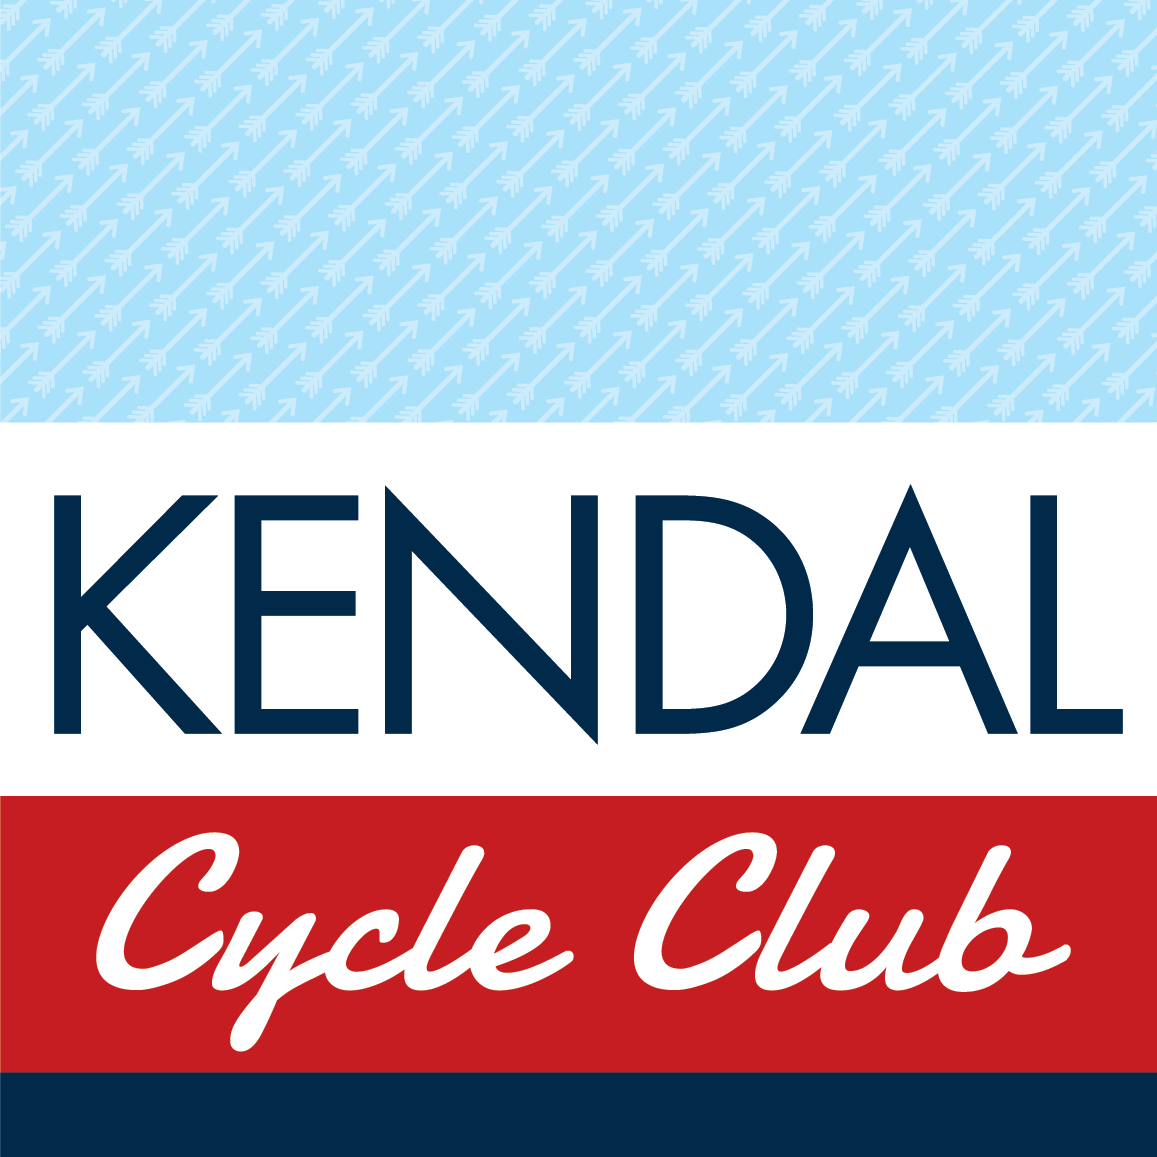 Kendal Cycle Club logo